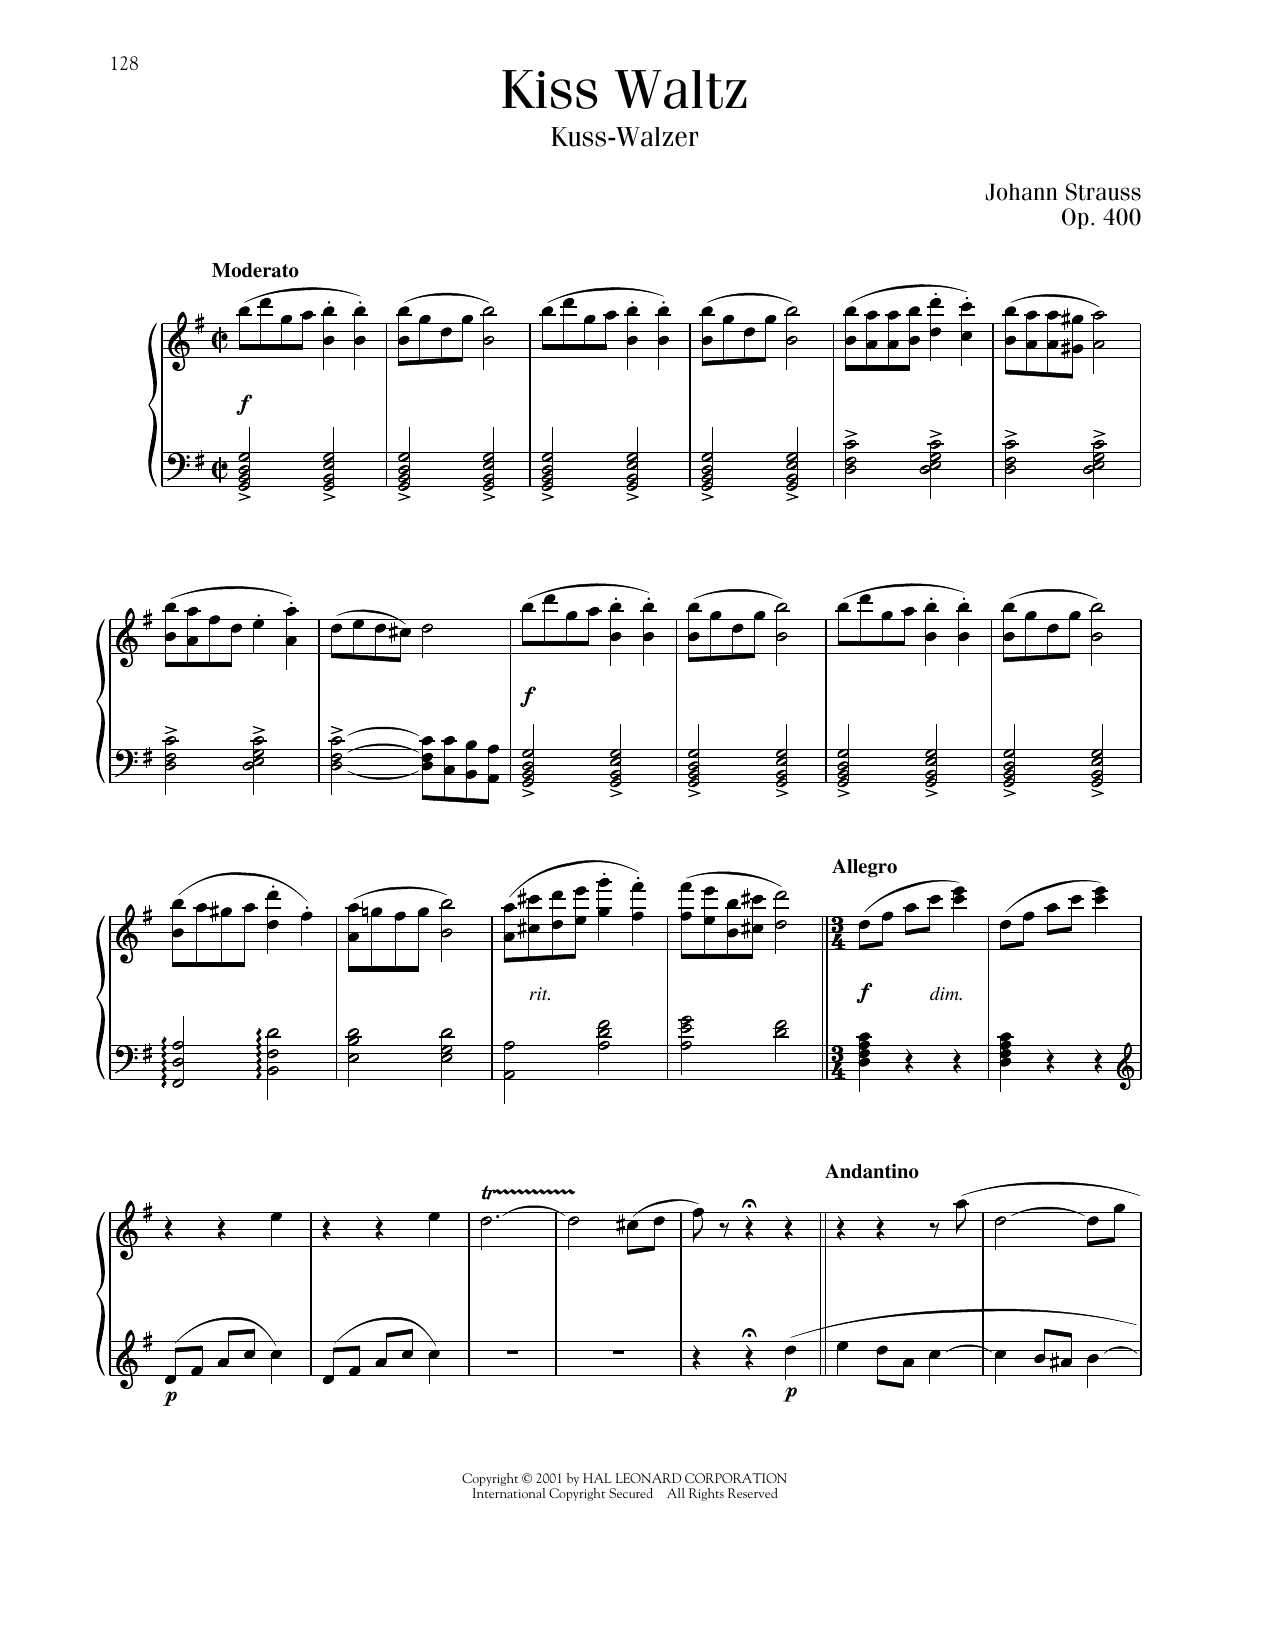 Johann Strauss Kiss Waltz, Op. 400 sheet music notes printable PDF score